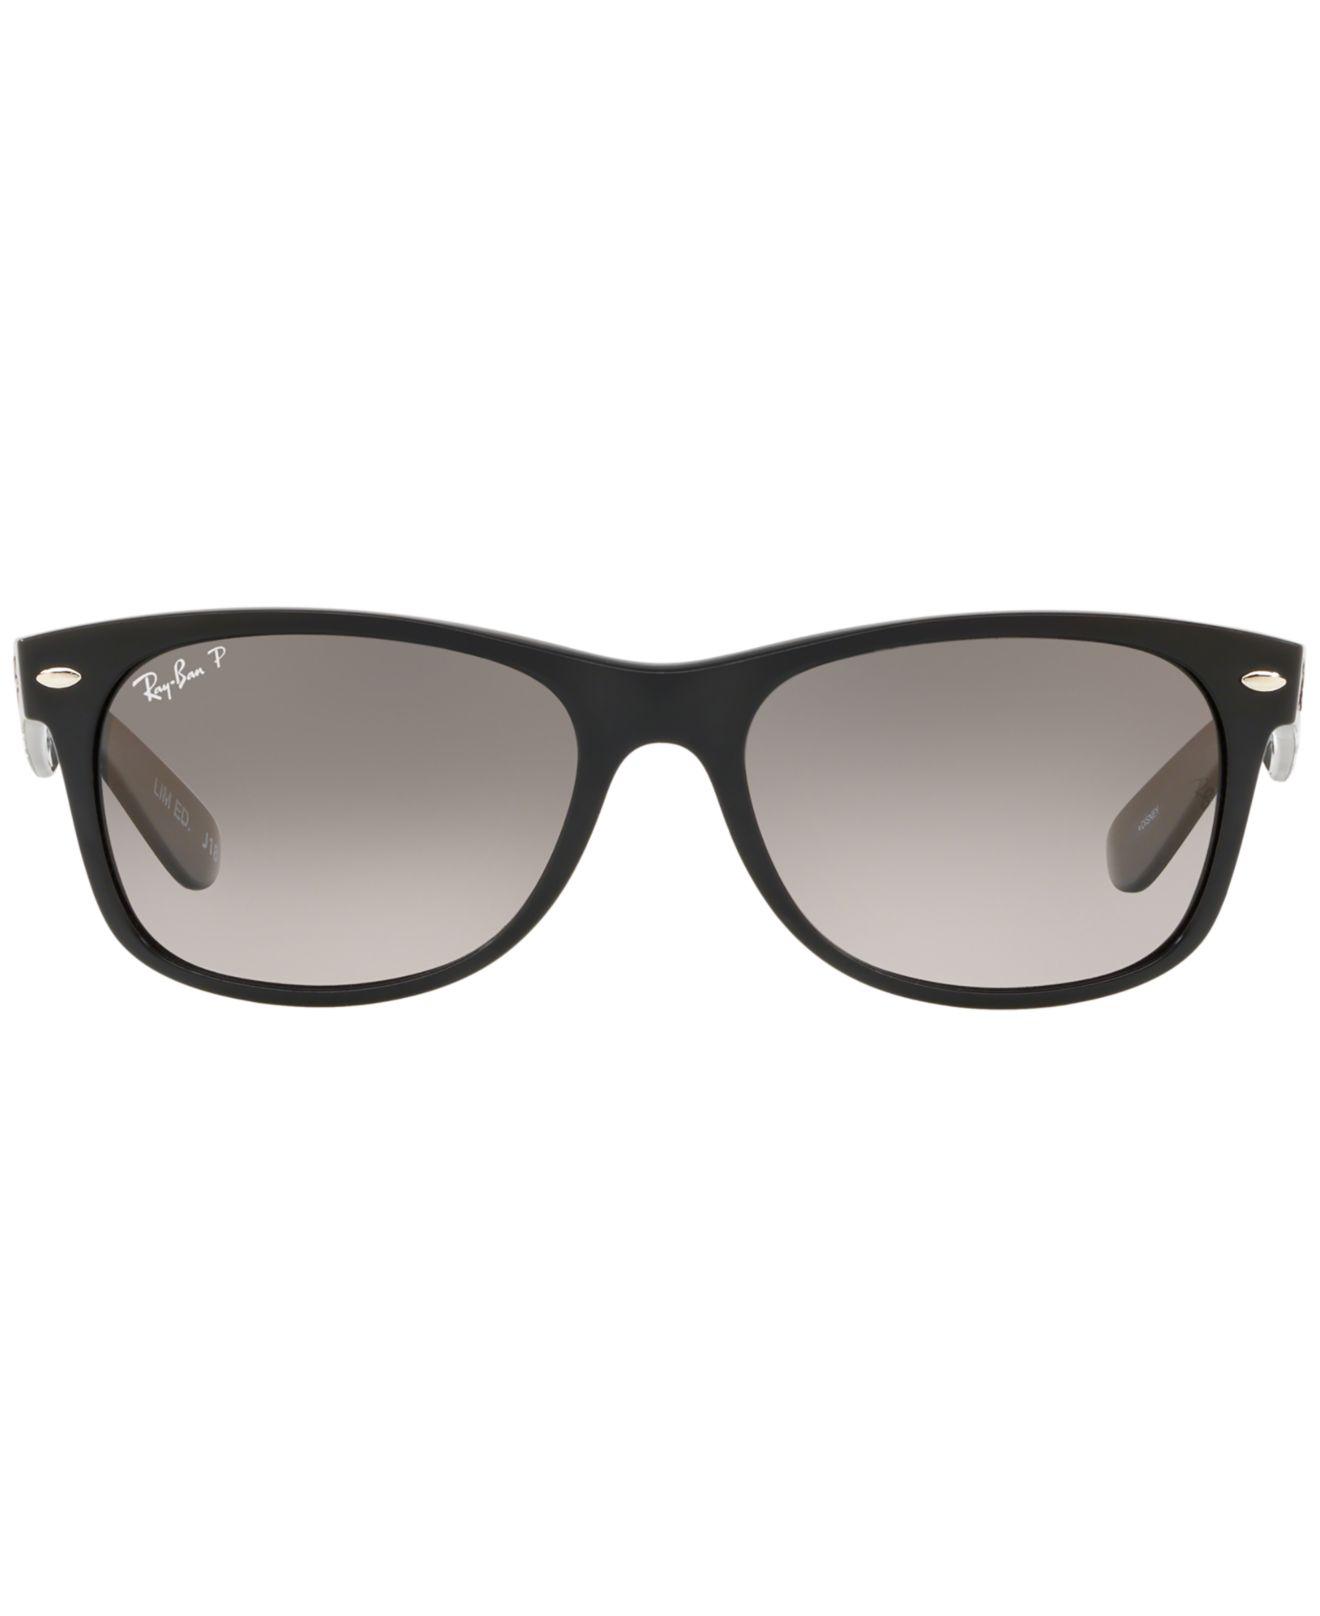 Ray Ban X Disney Polarized Sunglasses New Wayfarer Rb2132 55 Lyst